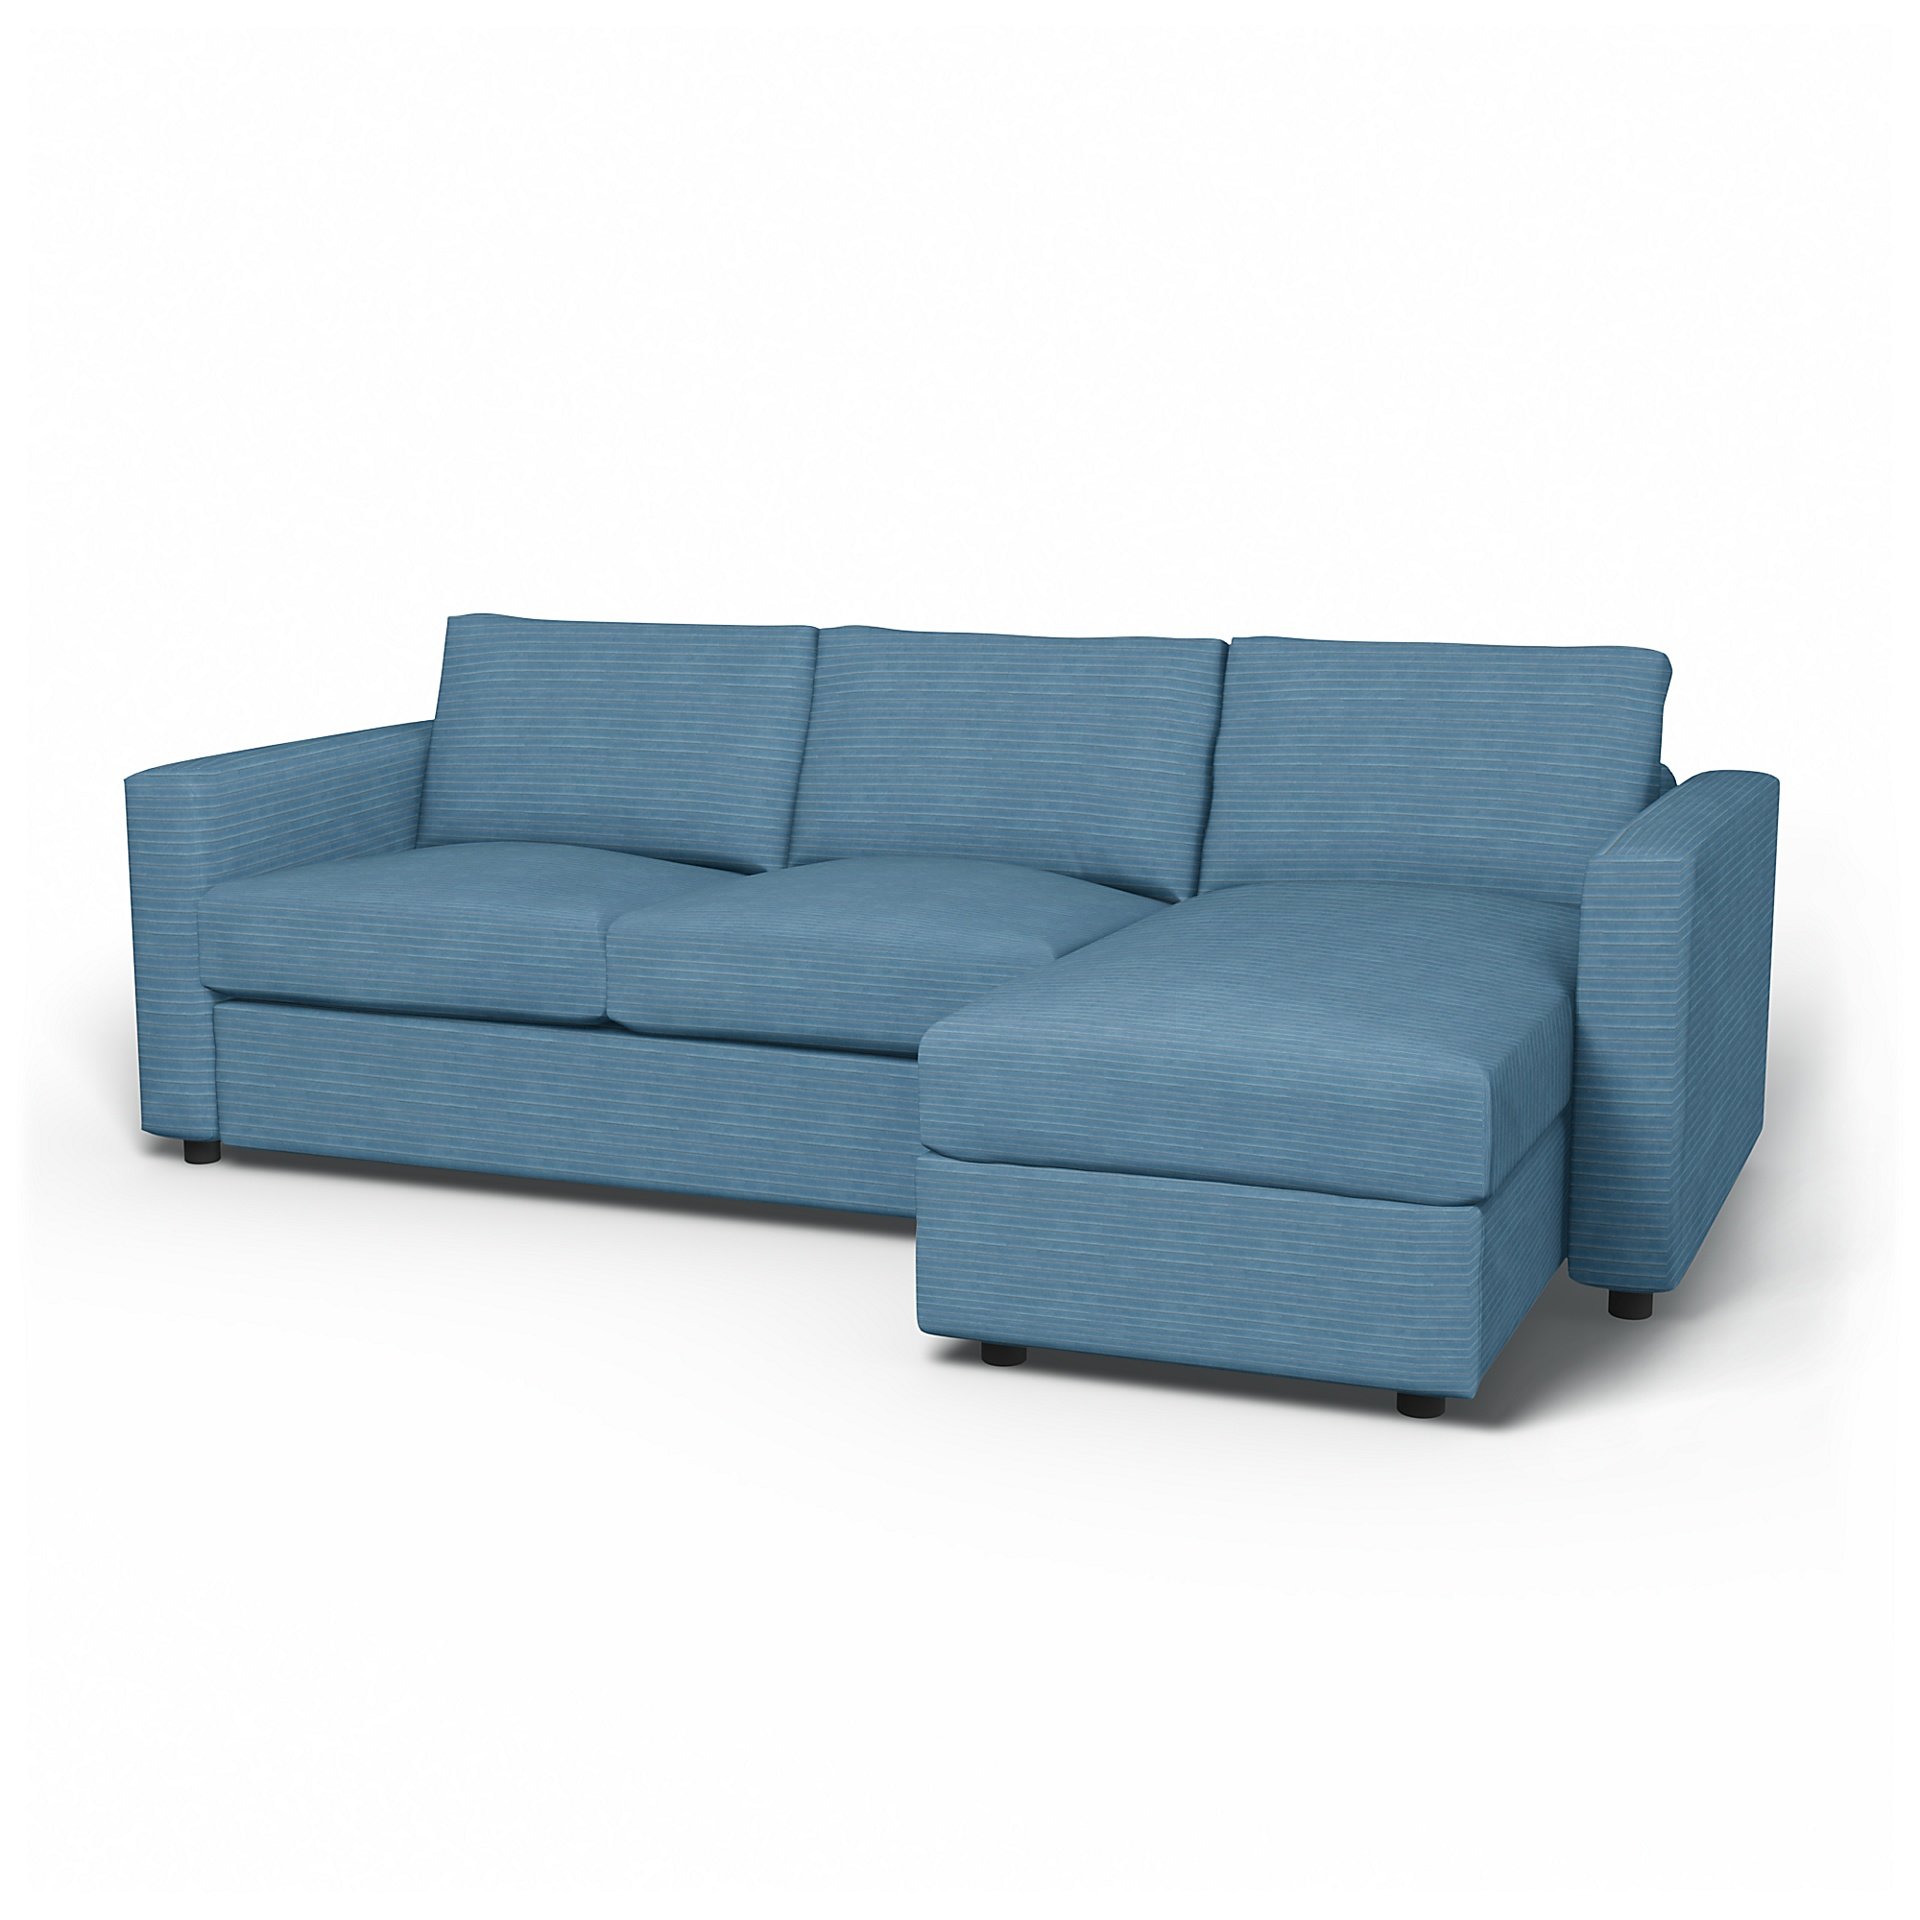 IKEA - Vimle 2 Seater Sofa with Chaise Cover, Sky Blue, Corduroy - Bemz